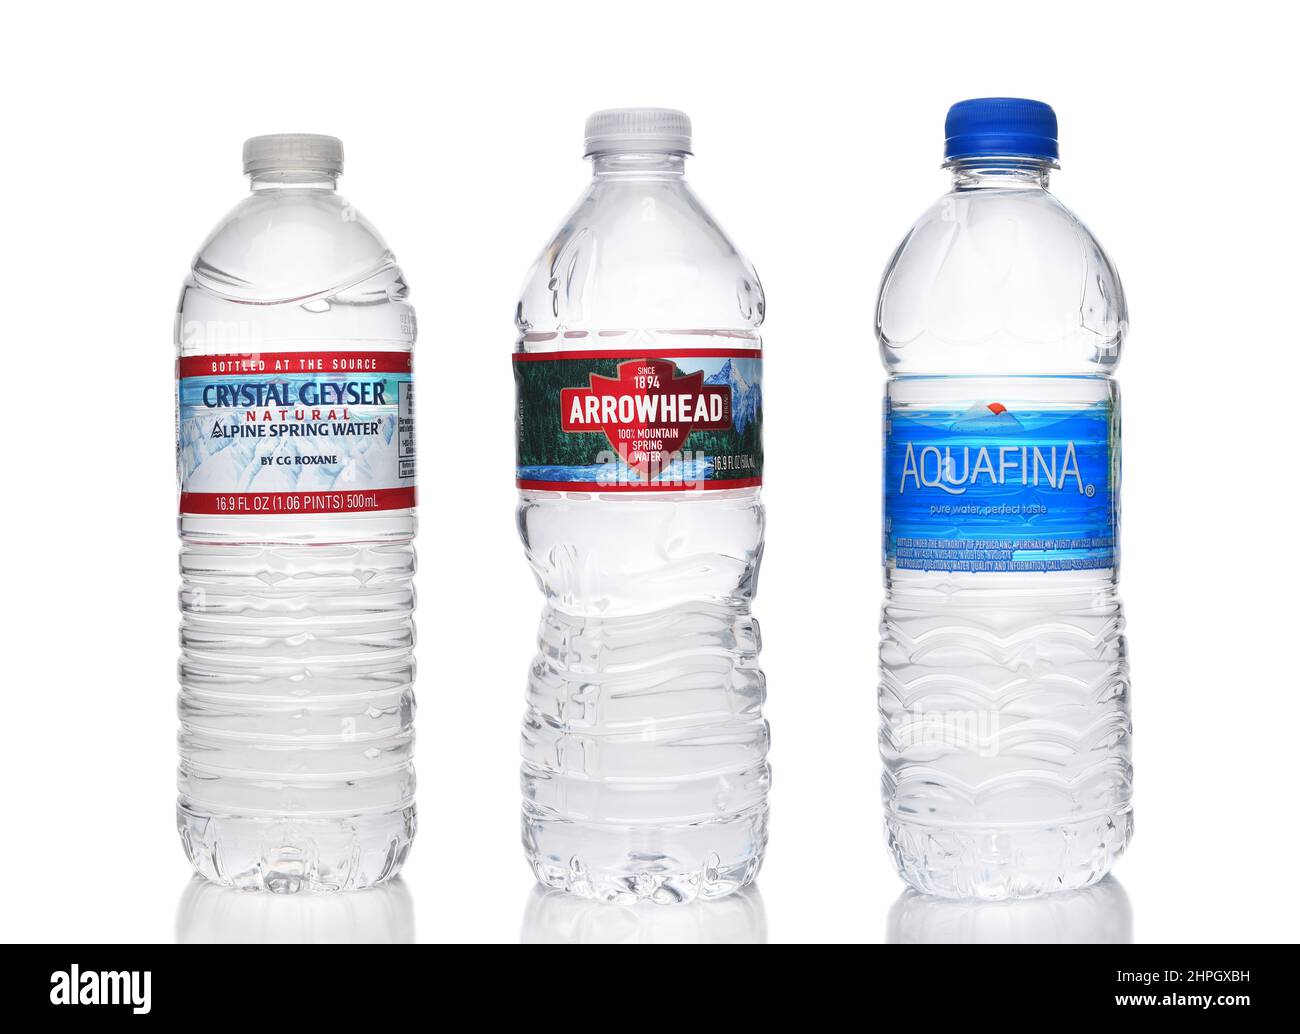 IRVINE, CALIFORNIA - 21 FEB 2022: Three popular brands of bottled water, Crystal Geyser, Aquafina, and Arrowhead. Stock Photo